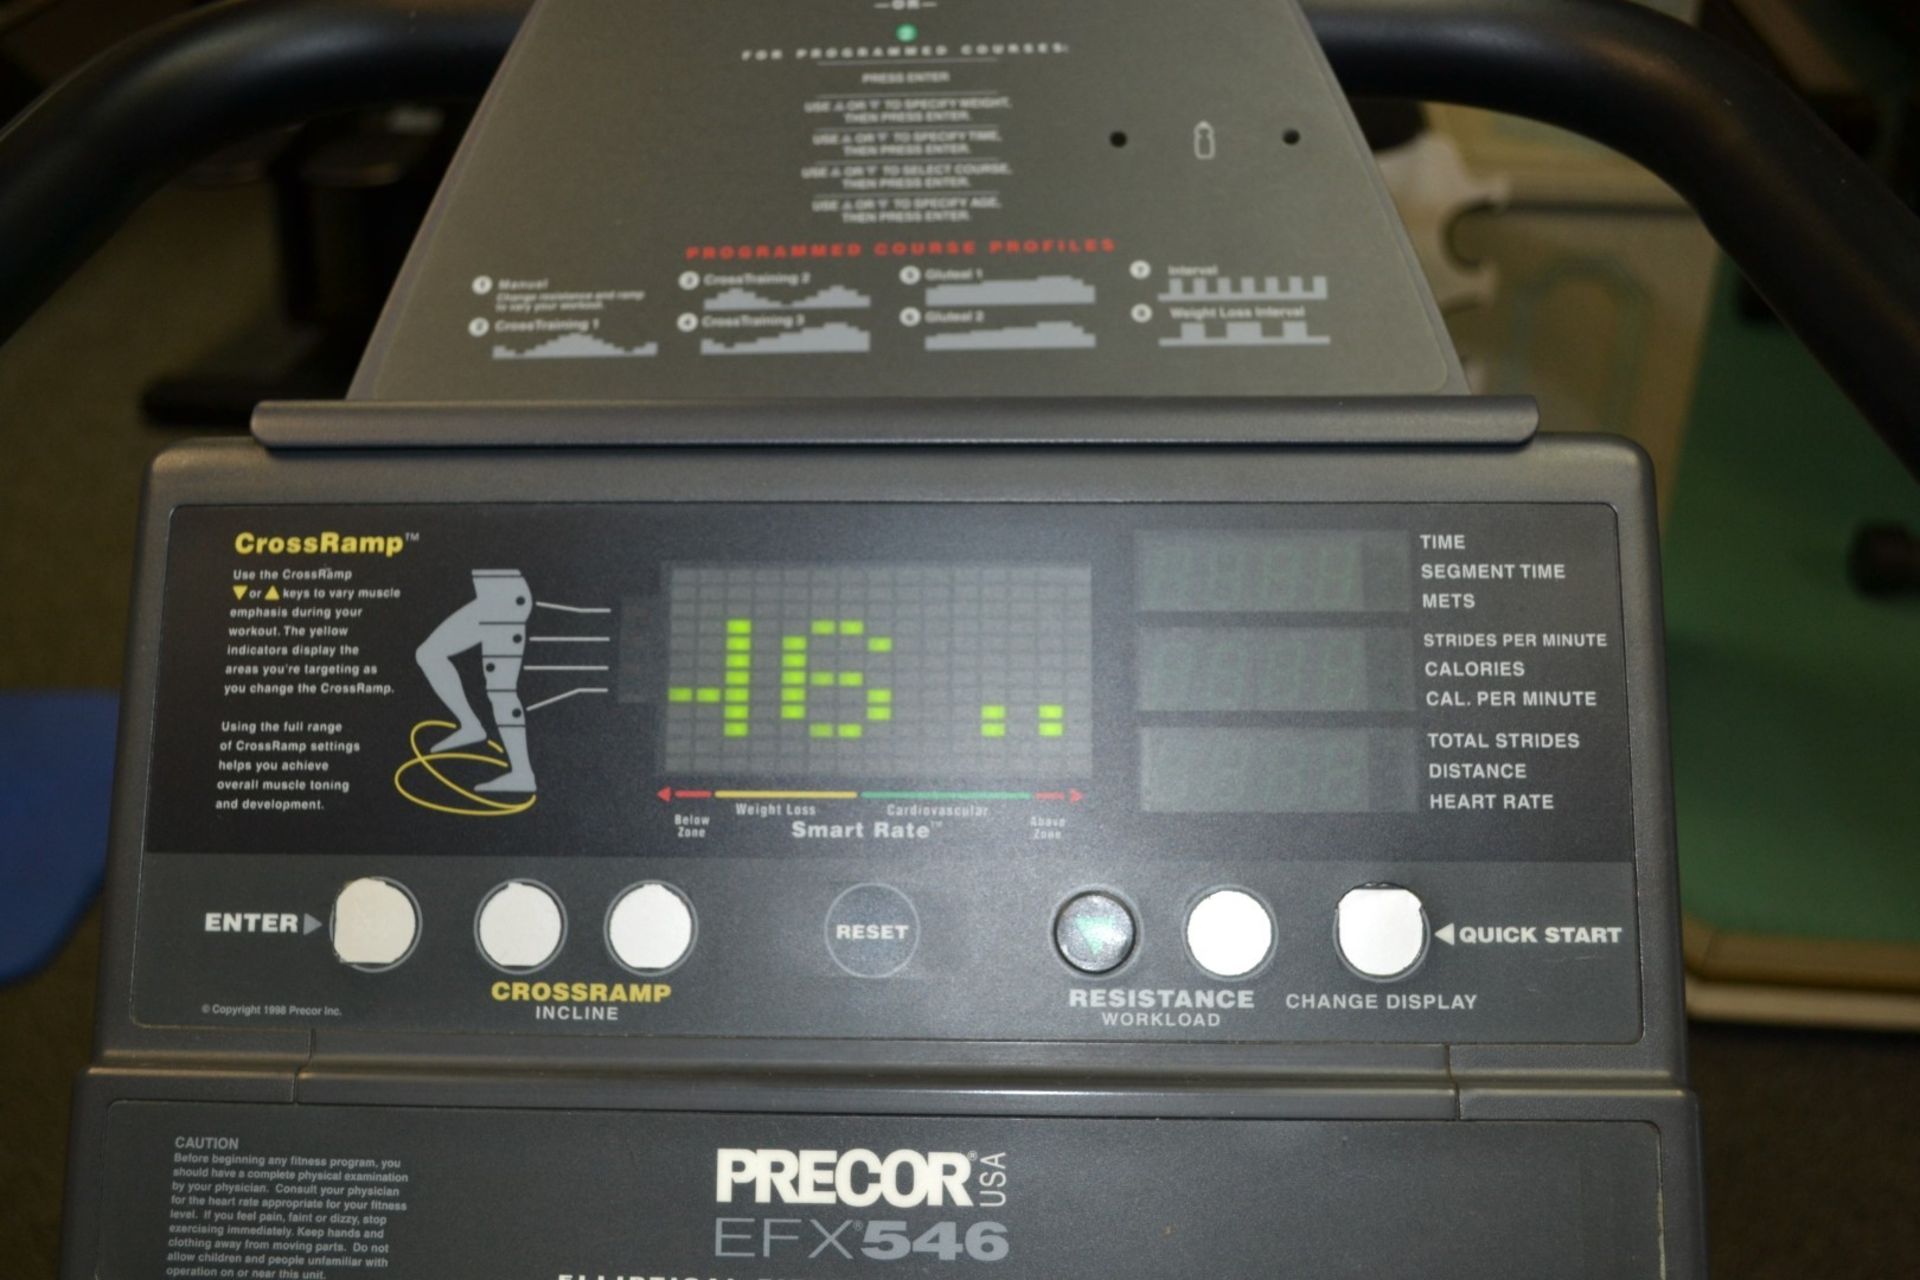 1 x Precor EFX 546 Cross-Trainer Gym Machine - Dimensions: L200 x W90 x H155cm - Ref: J2037/1FG - - Image 2 of 3